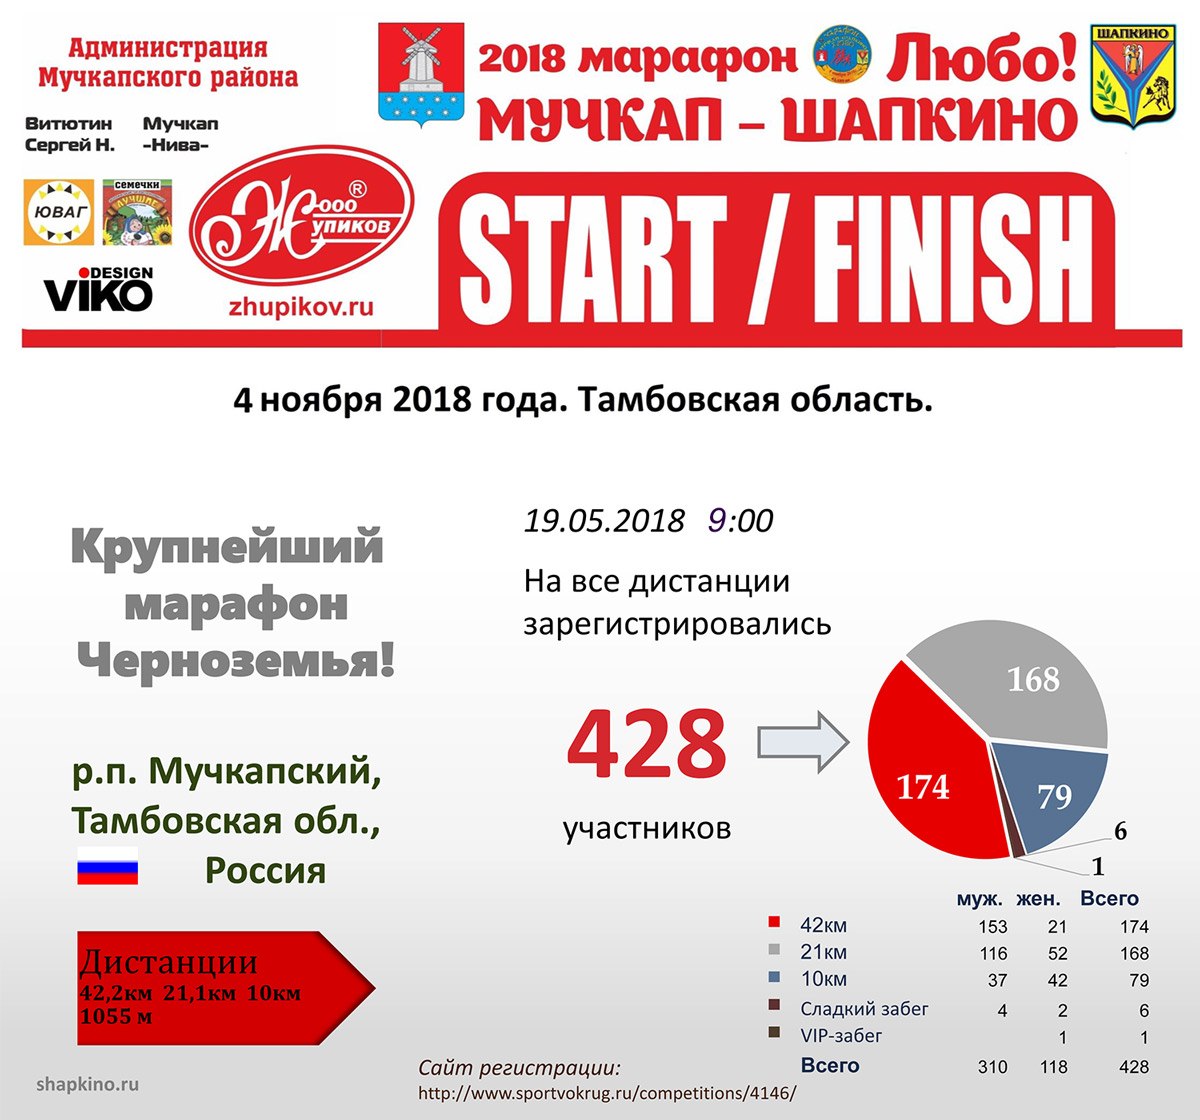 На  VII марафон "Мучкап-Шапкино-Любо!" зарегистрировались 428 чел